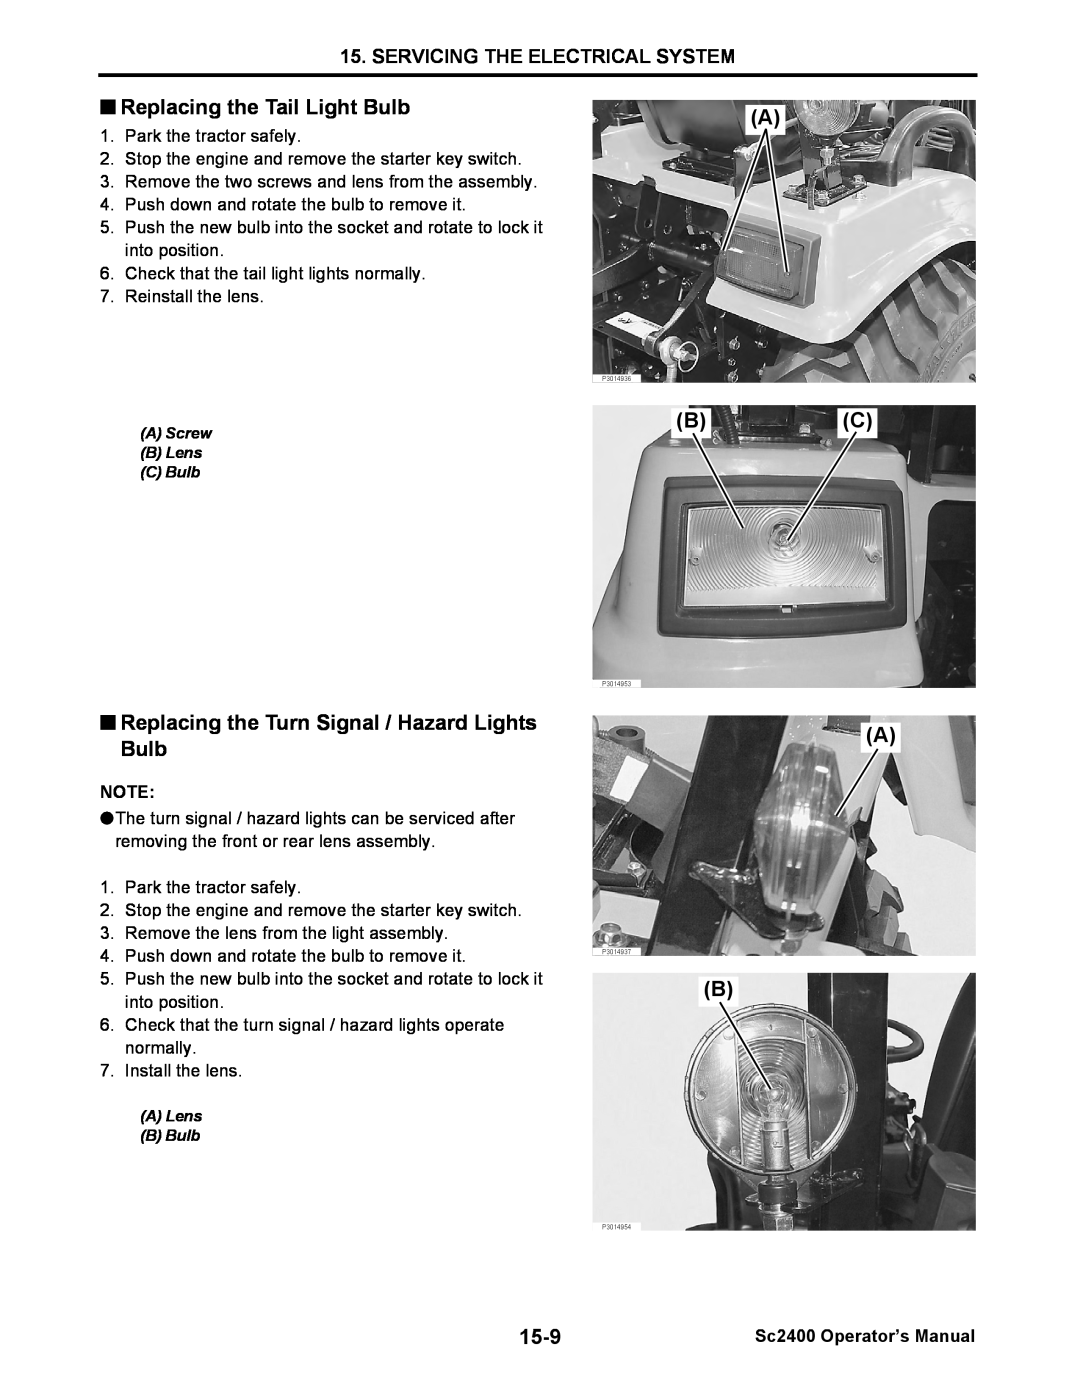 Cub Cadet SC2400 manual Replacing the Tail Light Bulb, Replacing the Turn Signal / Hazard Lights Bulb, 15-9 